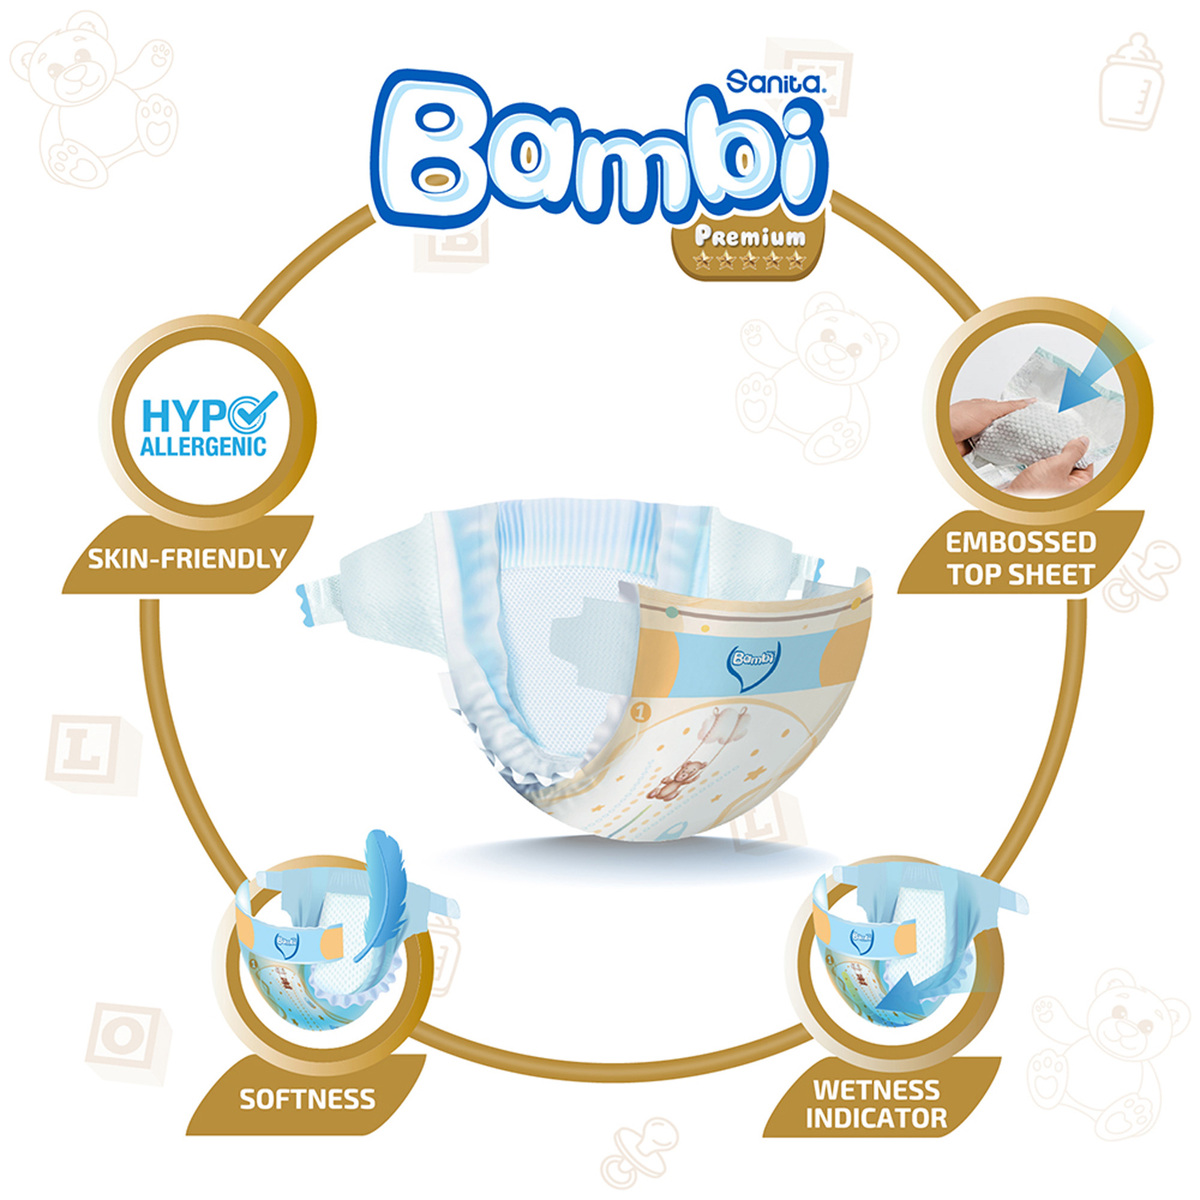 Sanita Bambi Baby Diaper Regular Pack Size 1 Newborn 2-4kg 19 pcs